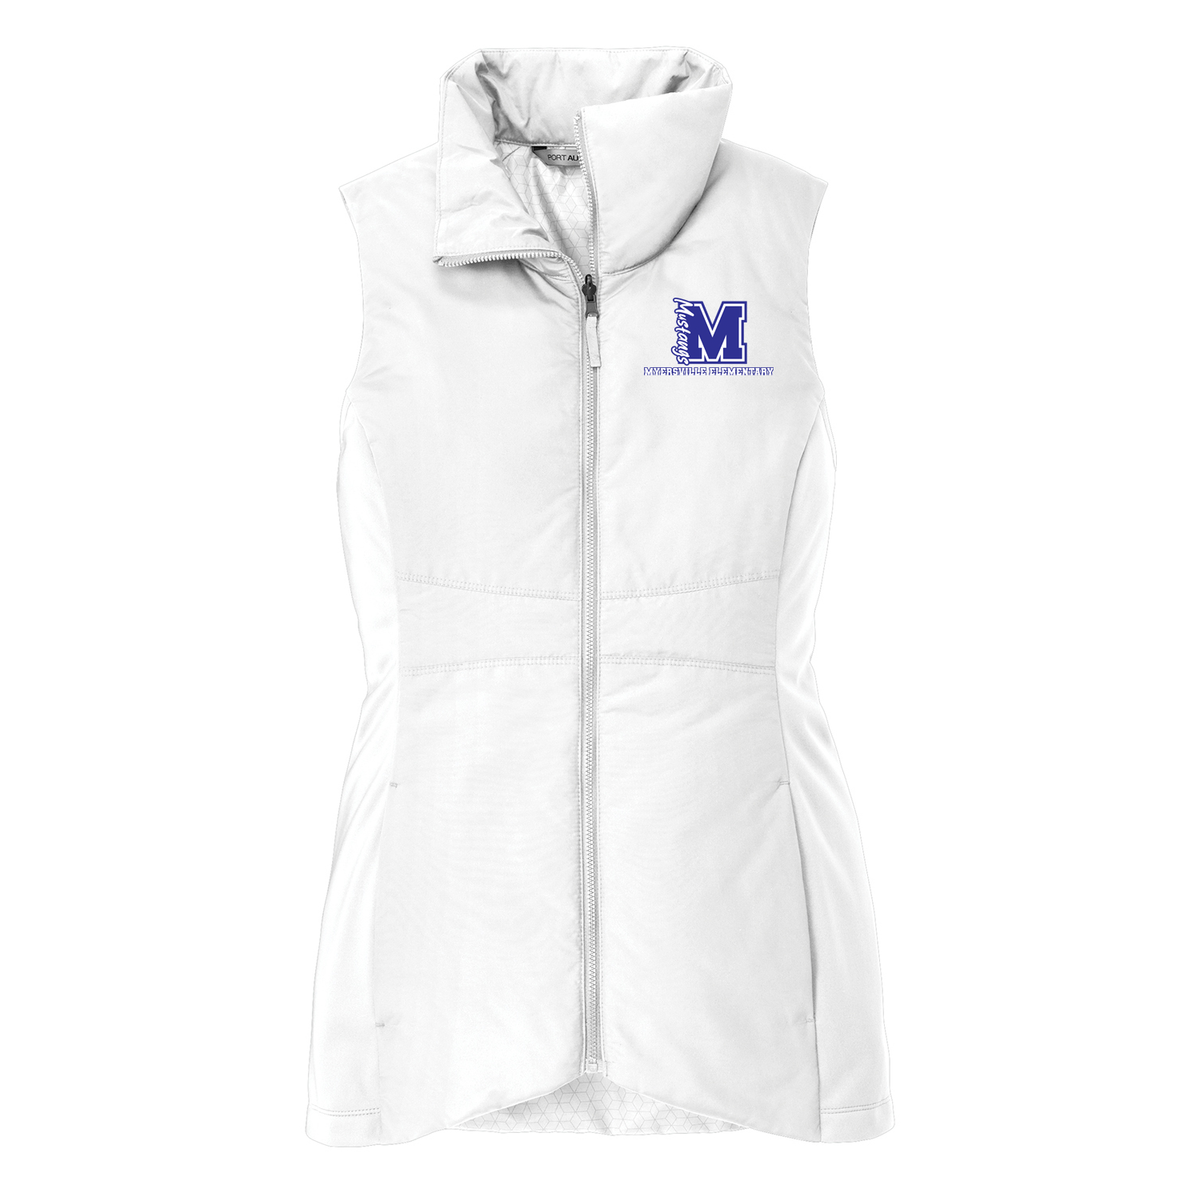 Myersville Elementary School Women's Vest